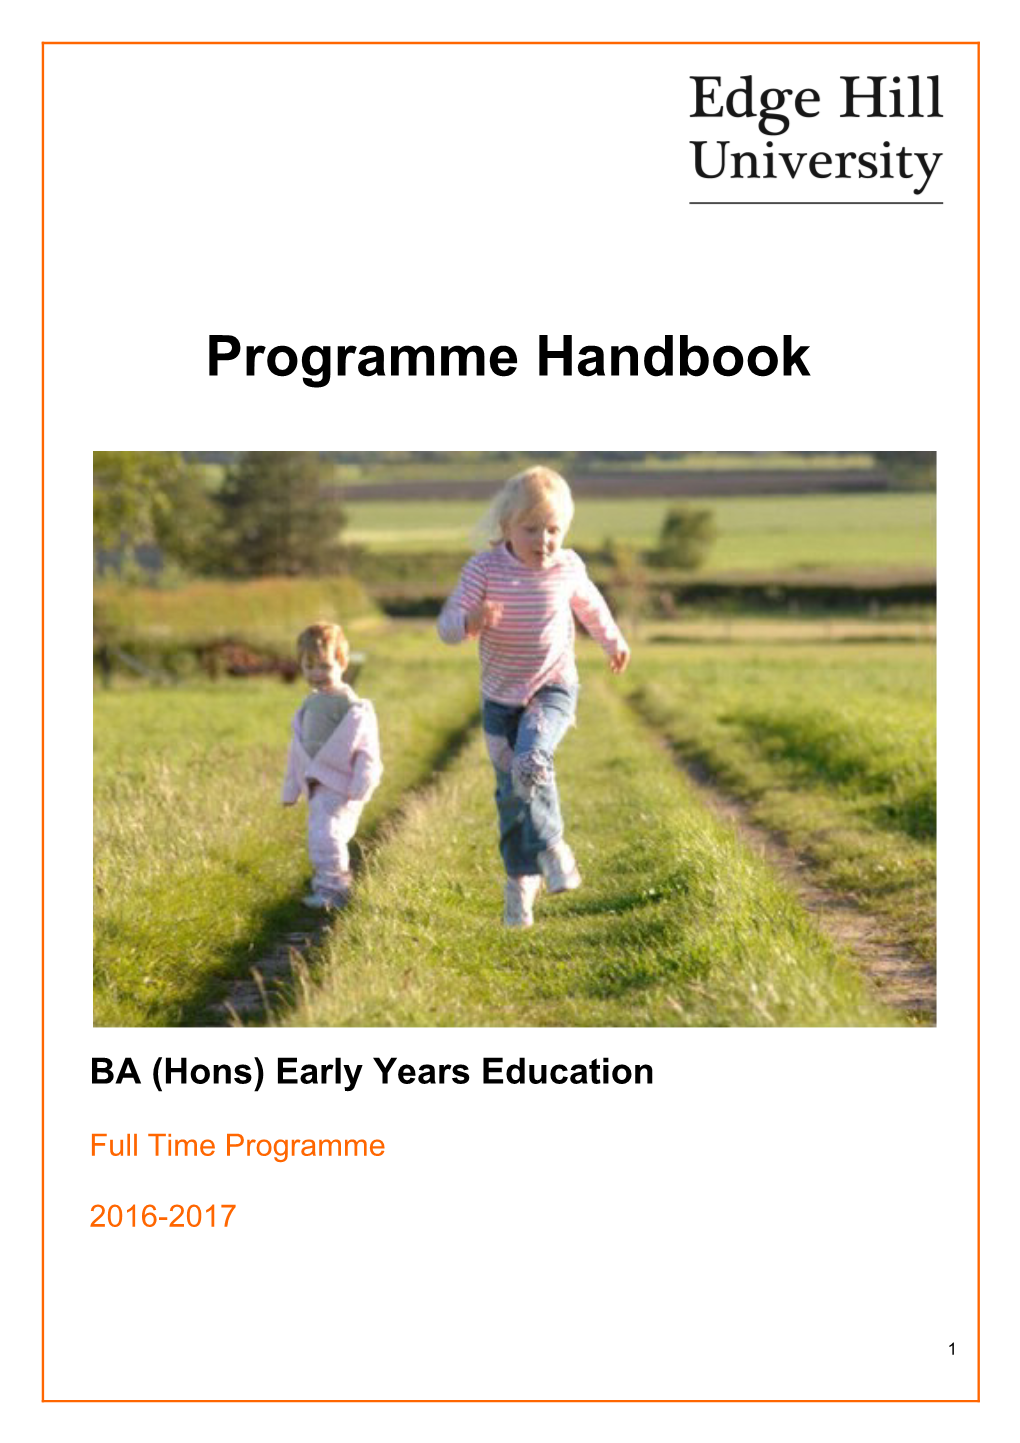 BA (Hons) Early Years Education